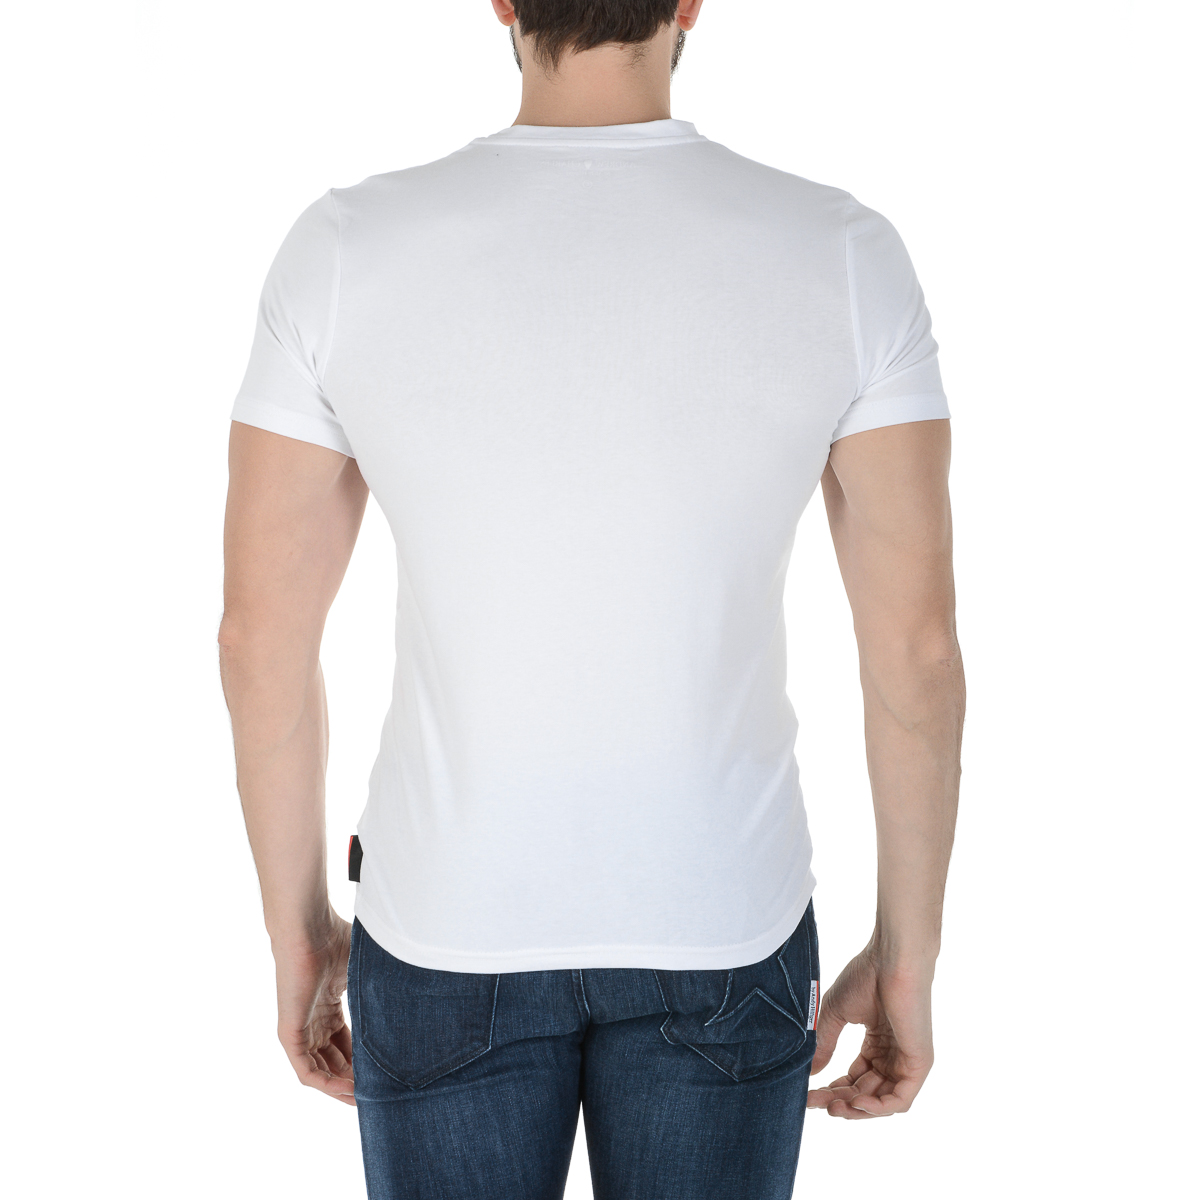 Andrew Charles Mens T-Shirt Short Sleeves Round Neck White KEITA